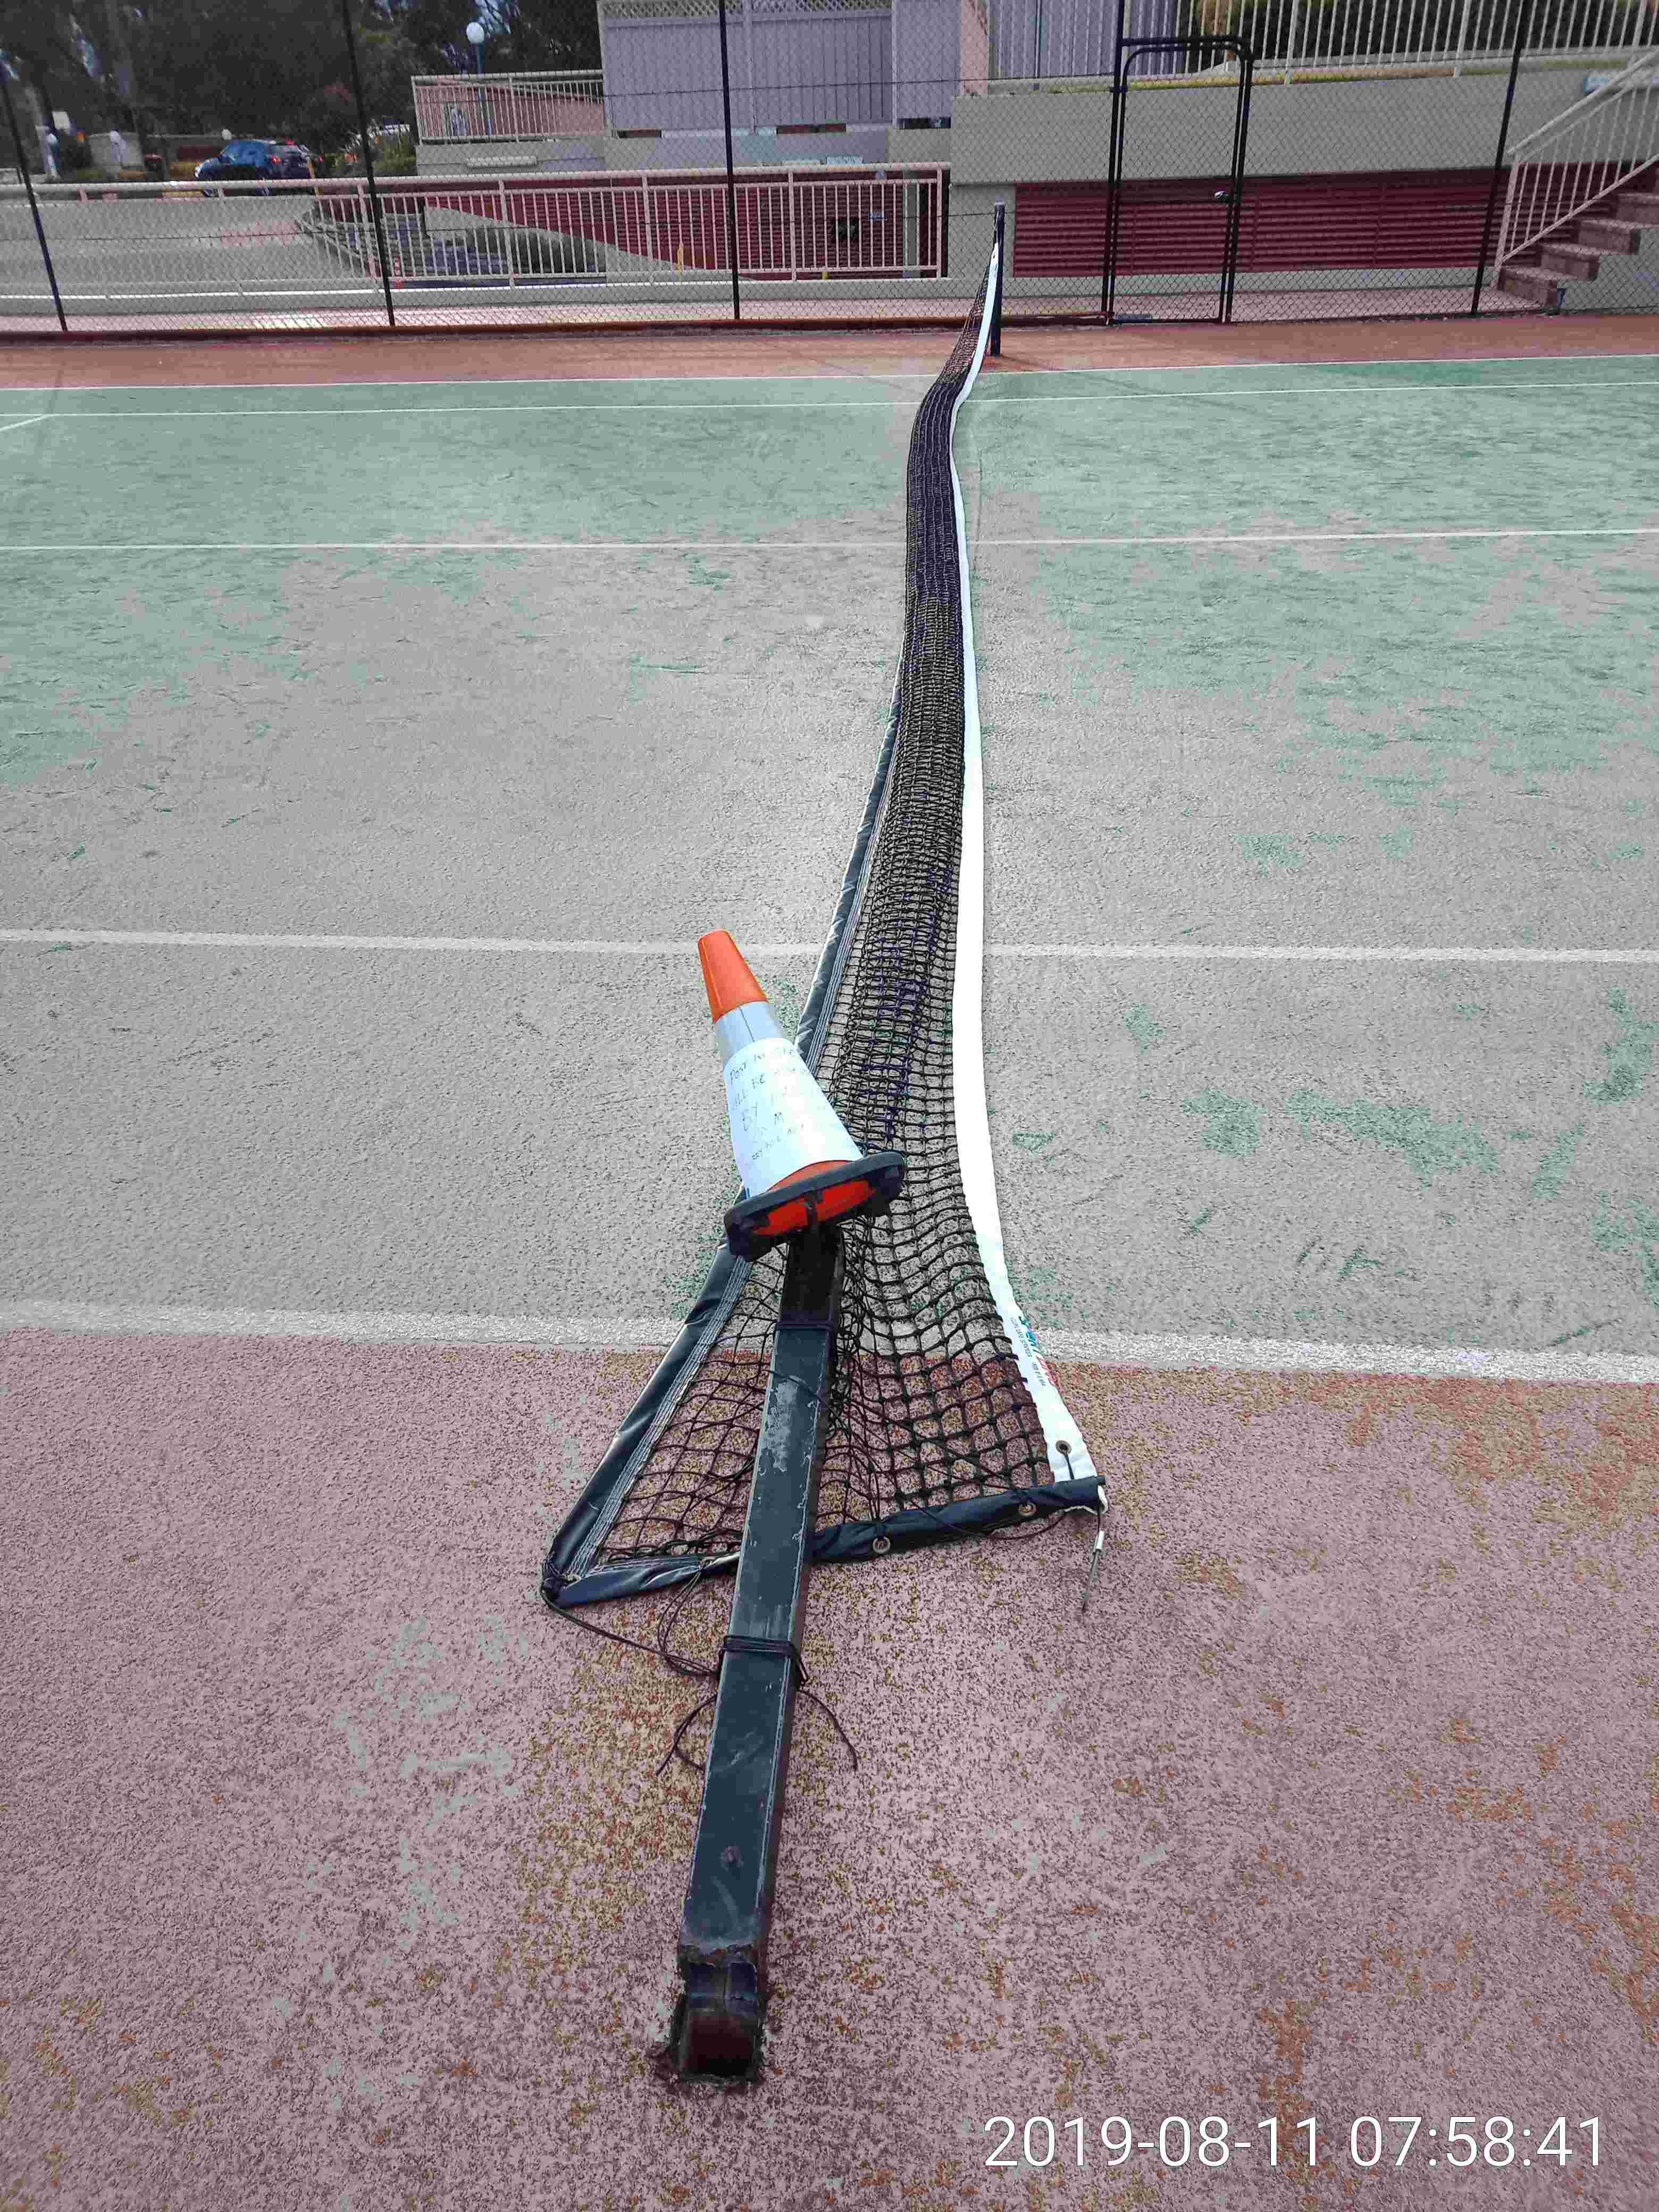 SP52948-tennis-court-2-damage-photo-6-11Aug2019.jpg